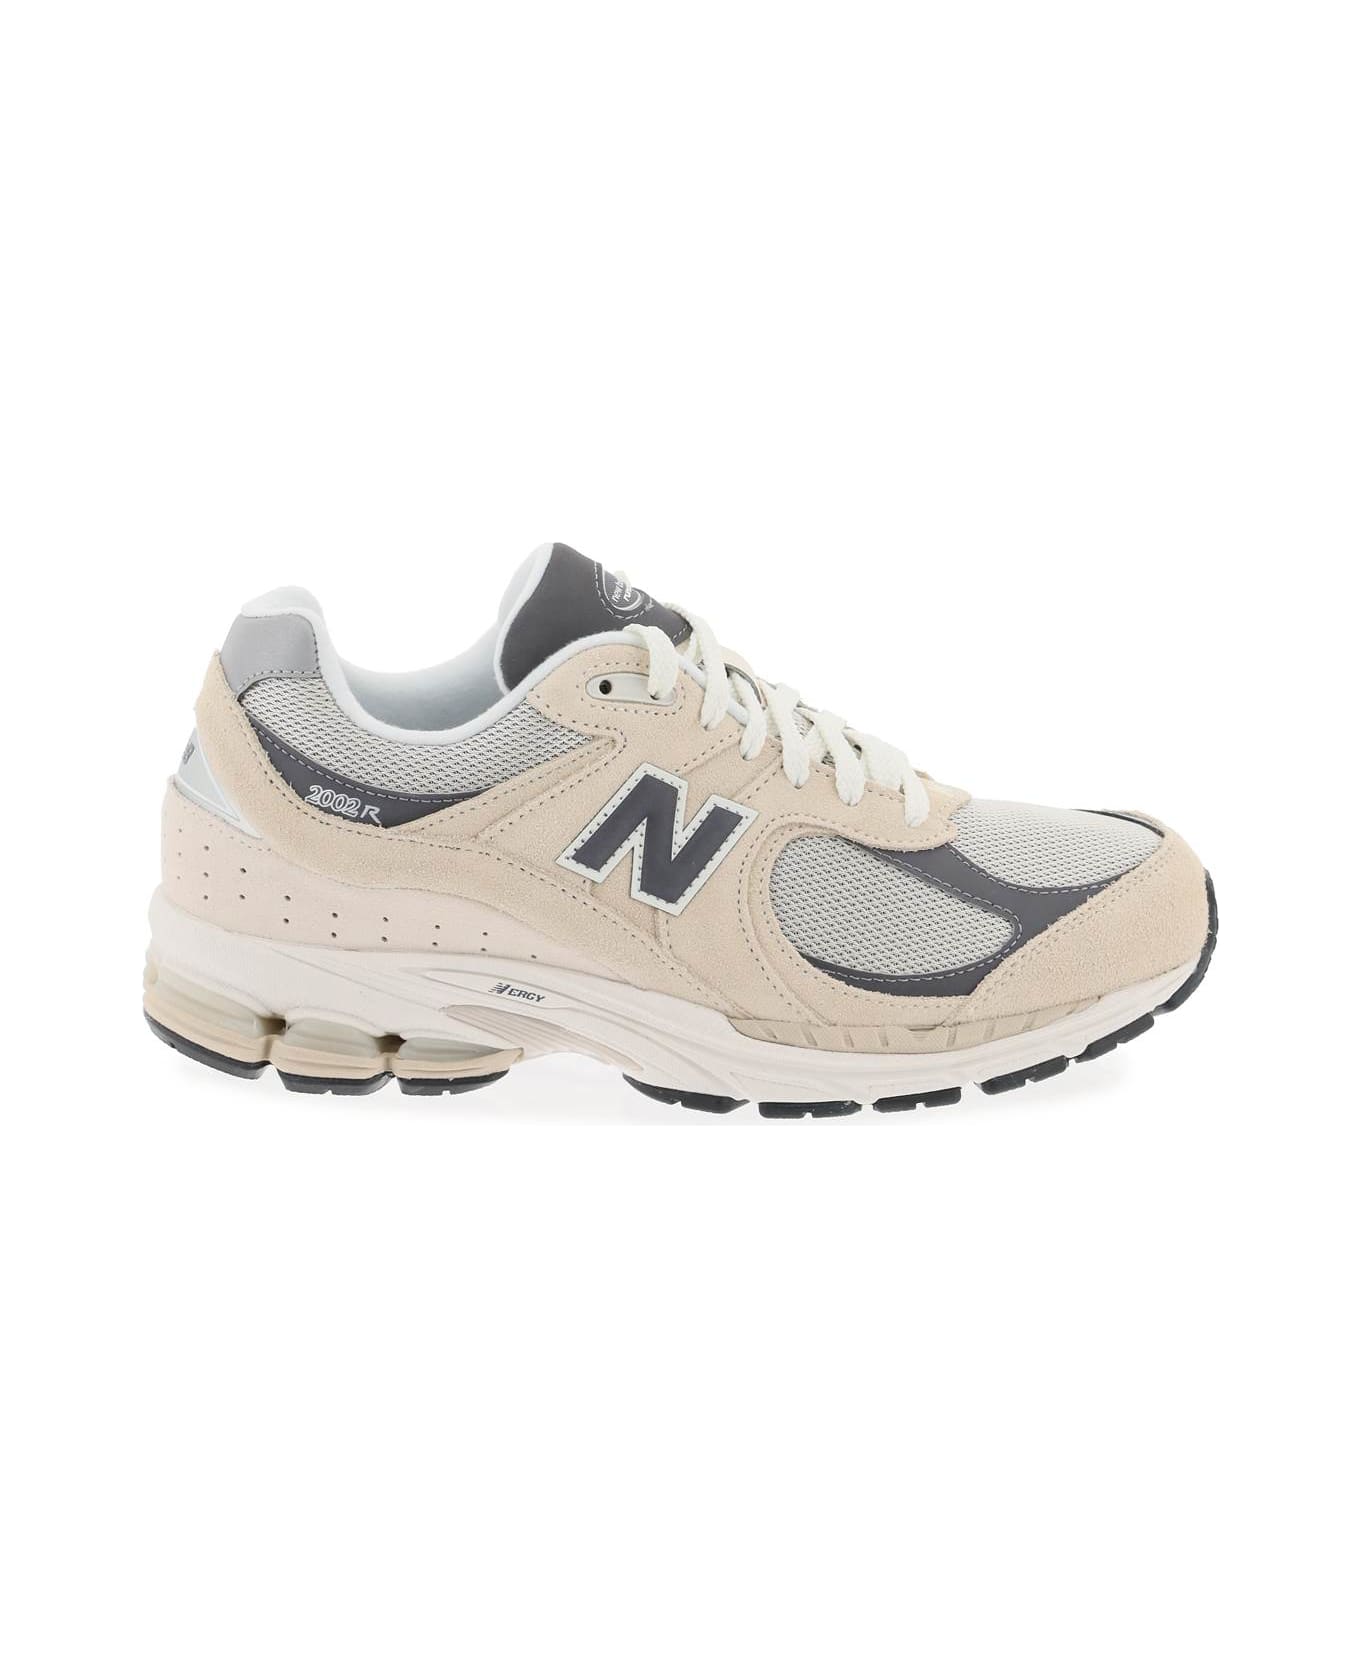 New Balance 2002r Sneakers - SANDSTONE (Grey) スニーカー